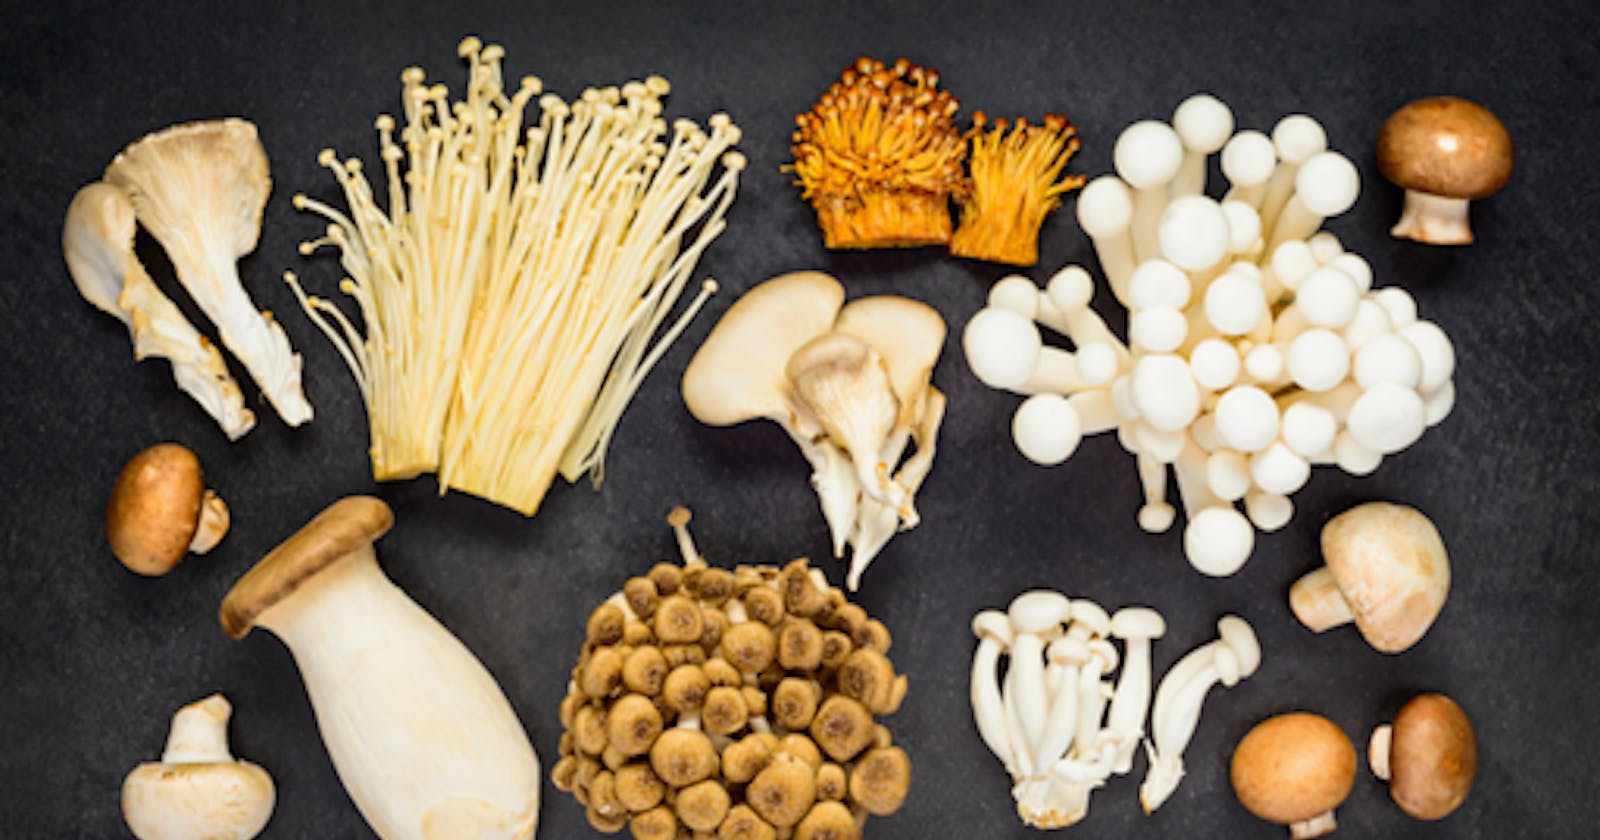 3 Mushroom Adaptogen Blends Used For Optimal Health